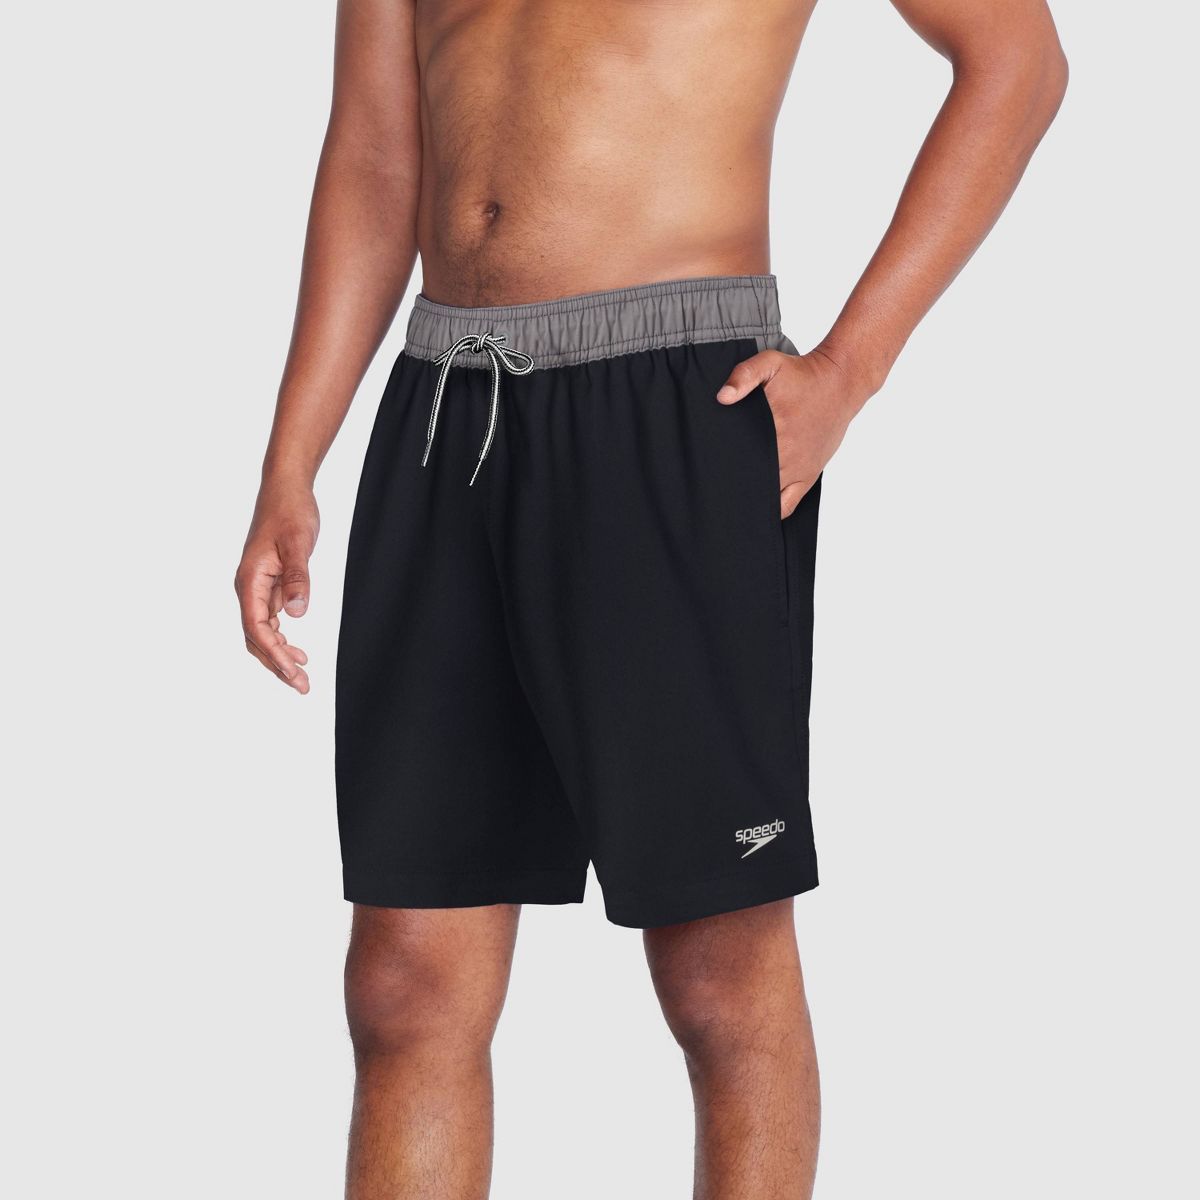 Speedo Men's 5.5" Colorblock Swim Shorts - Gray/Black | Target